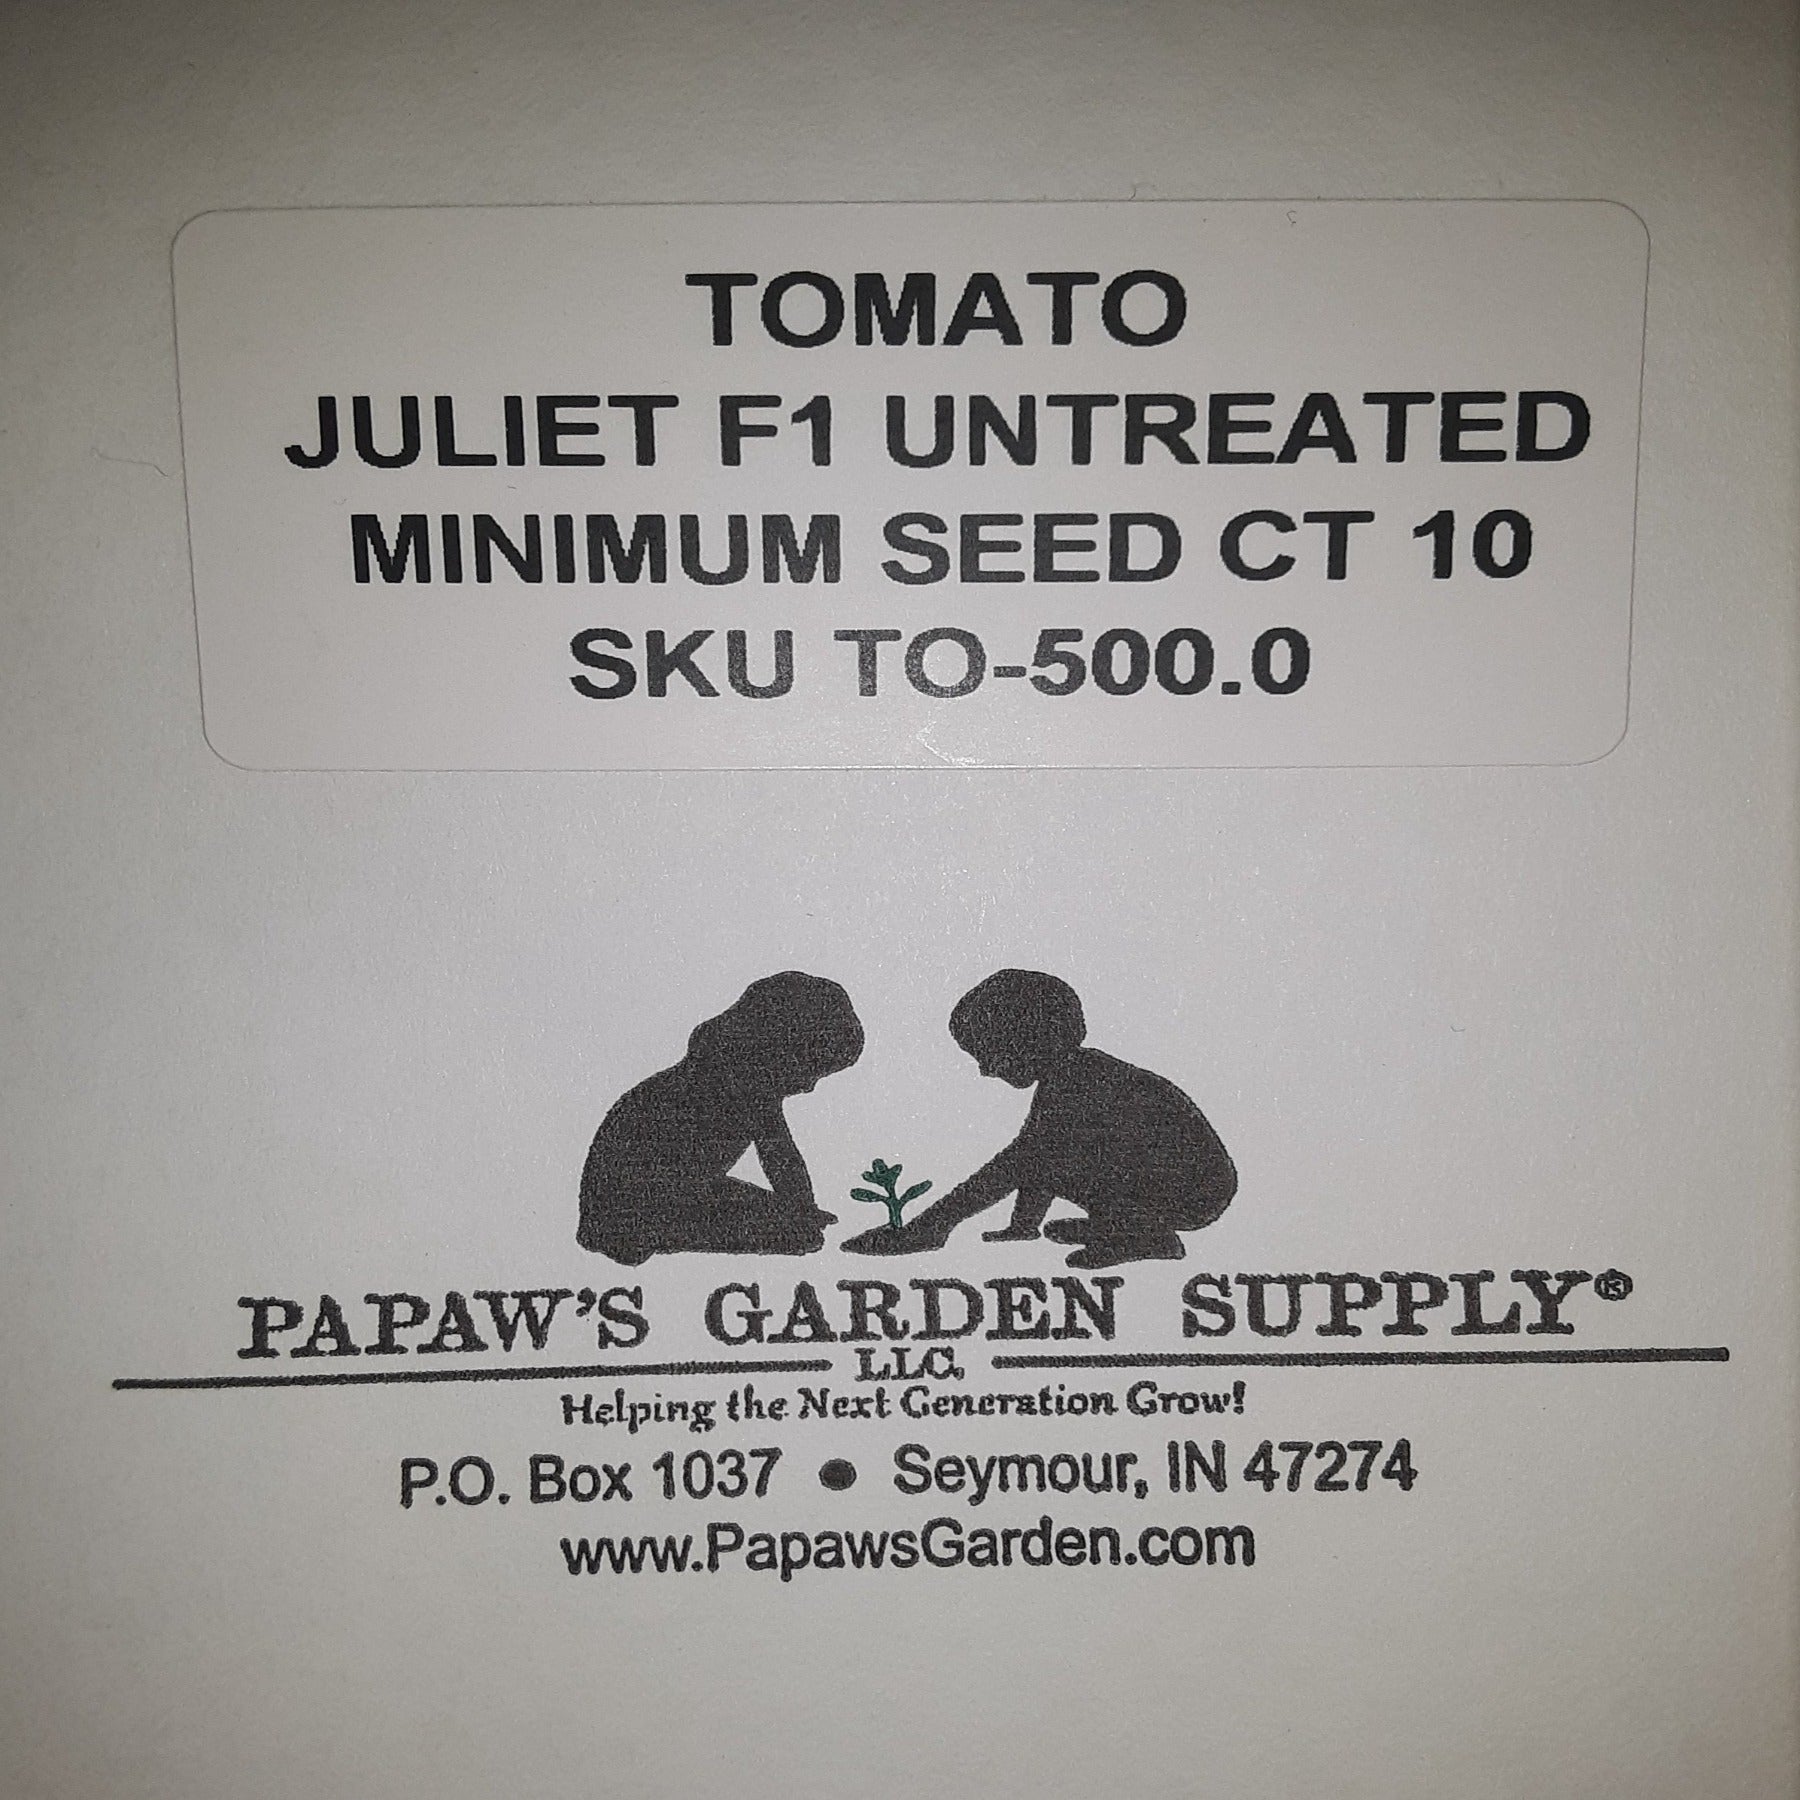 Juliet Untreated Hybrid Paste Tomato Seeds